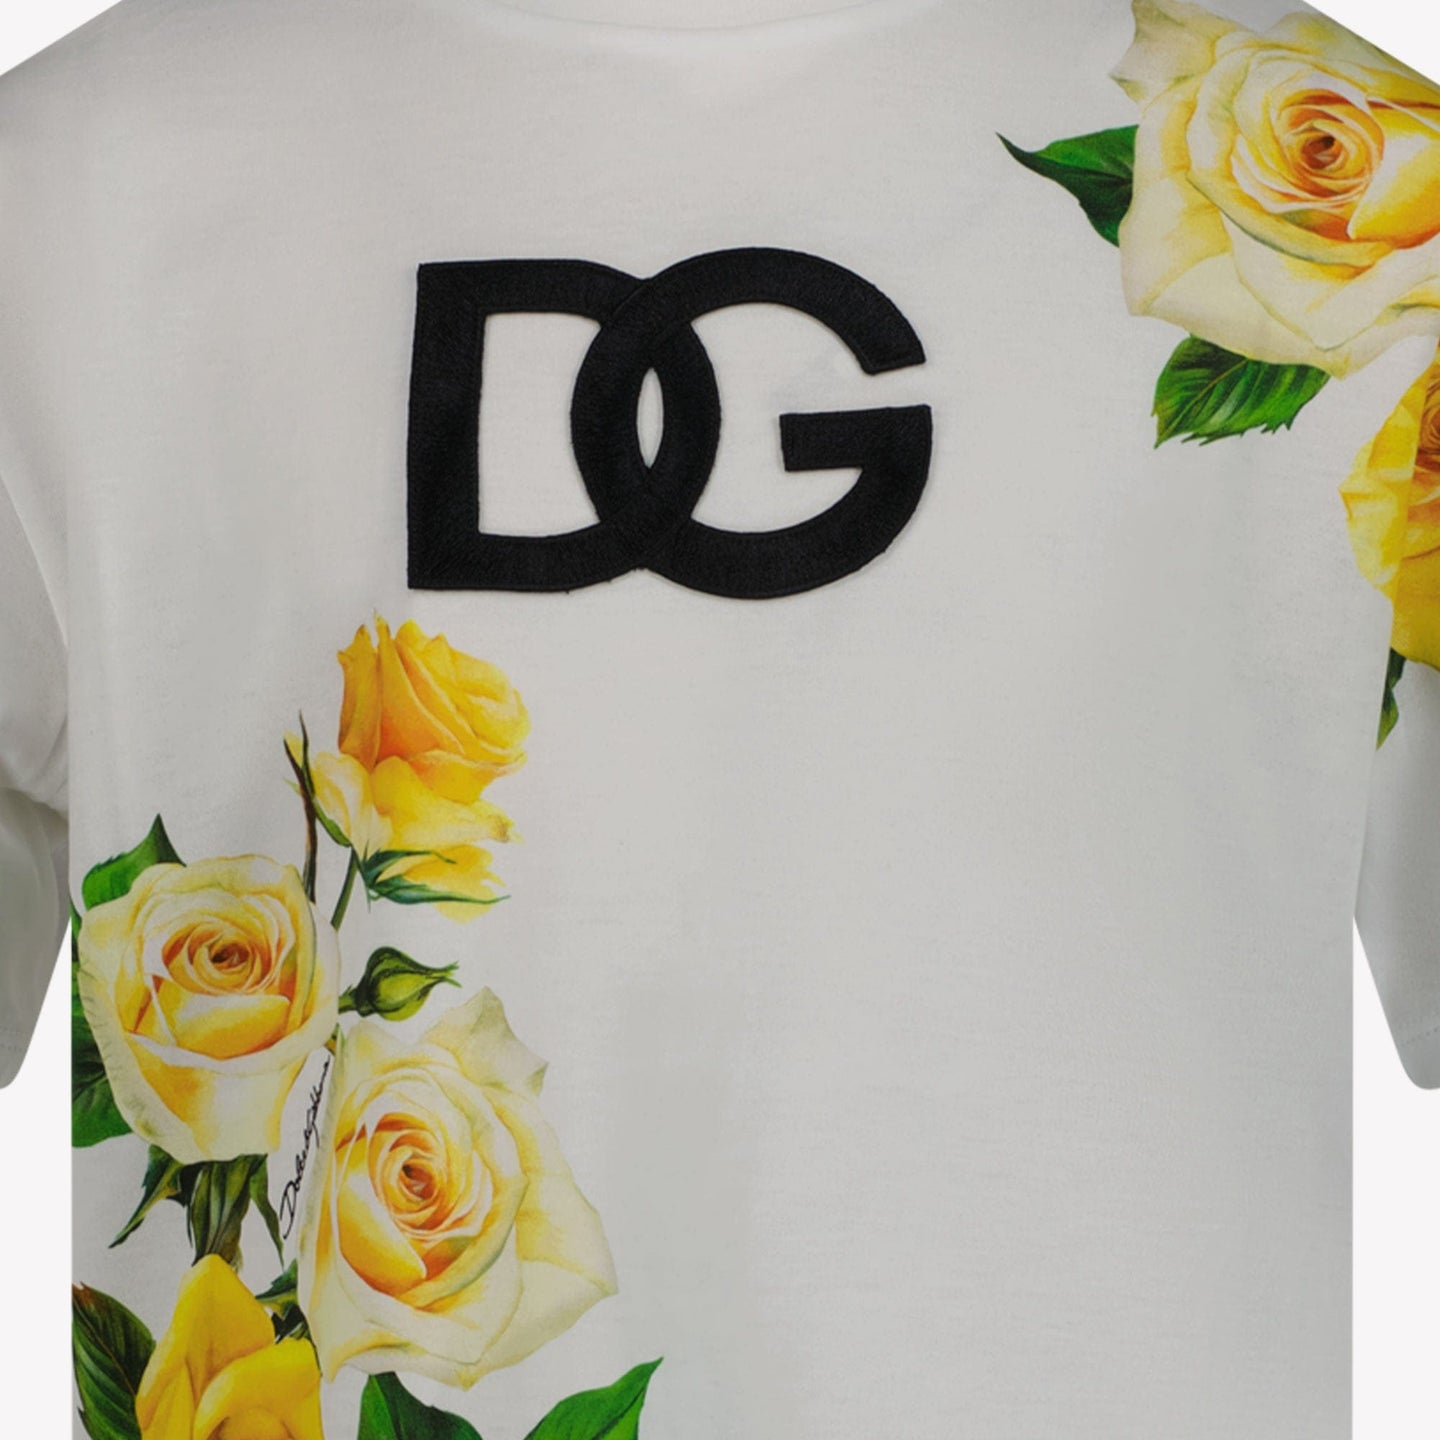 Dolce & Gabbana Kinder T-Shirt Wit 3Y